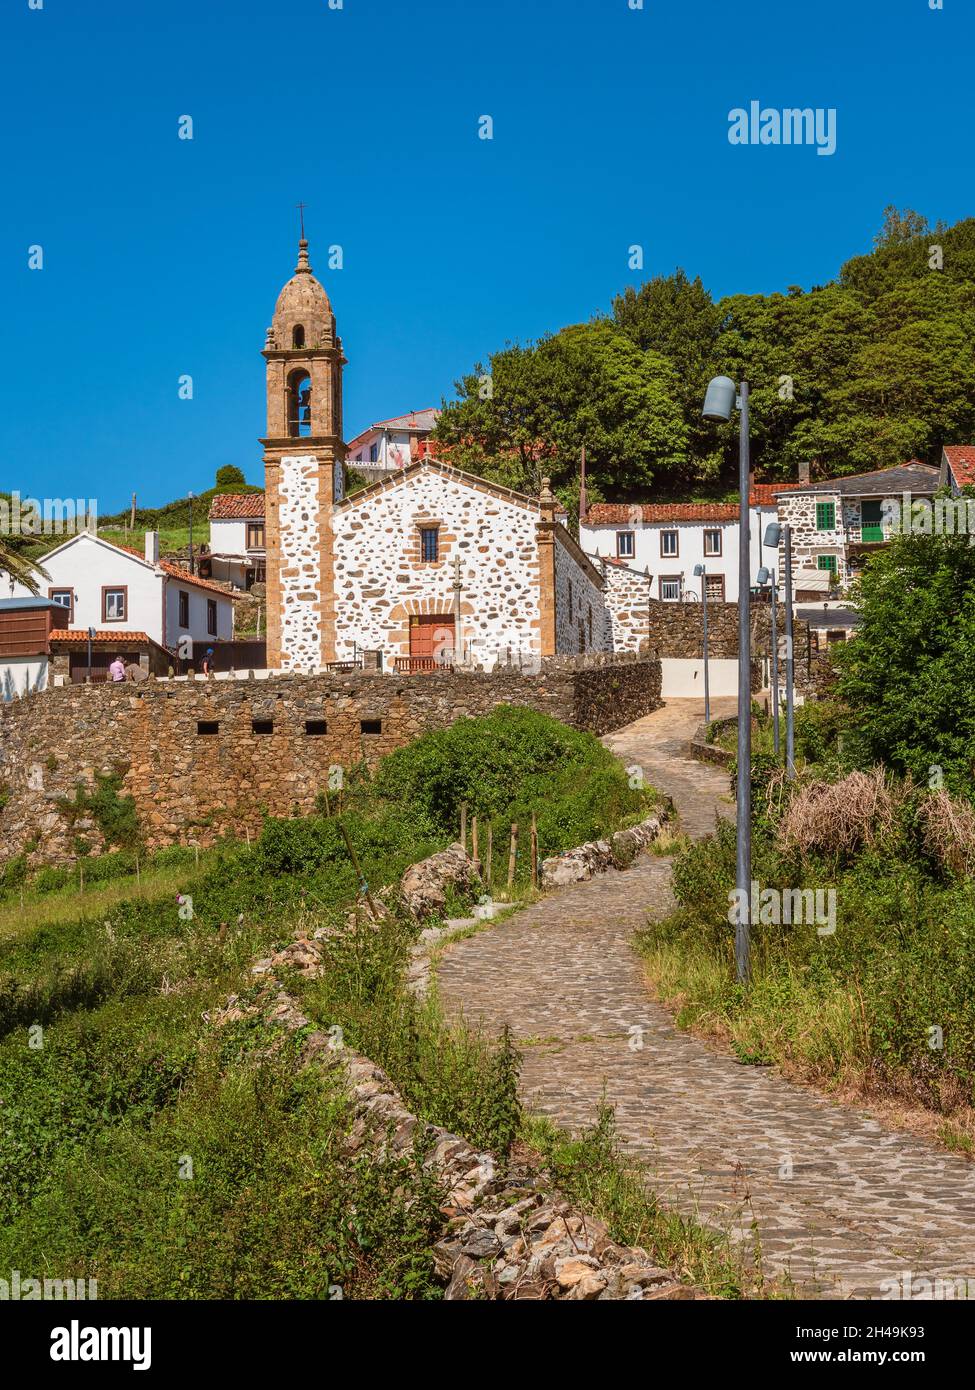 Beautiful church against blue sky. View of San Andrés de Teixido sanctuary in Galicia, Spain Stock Photo